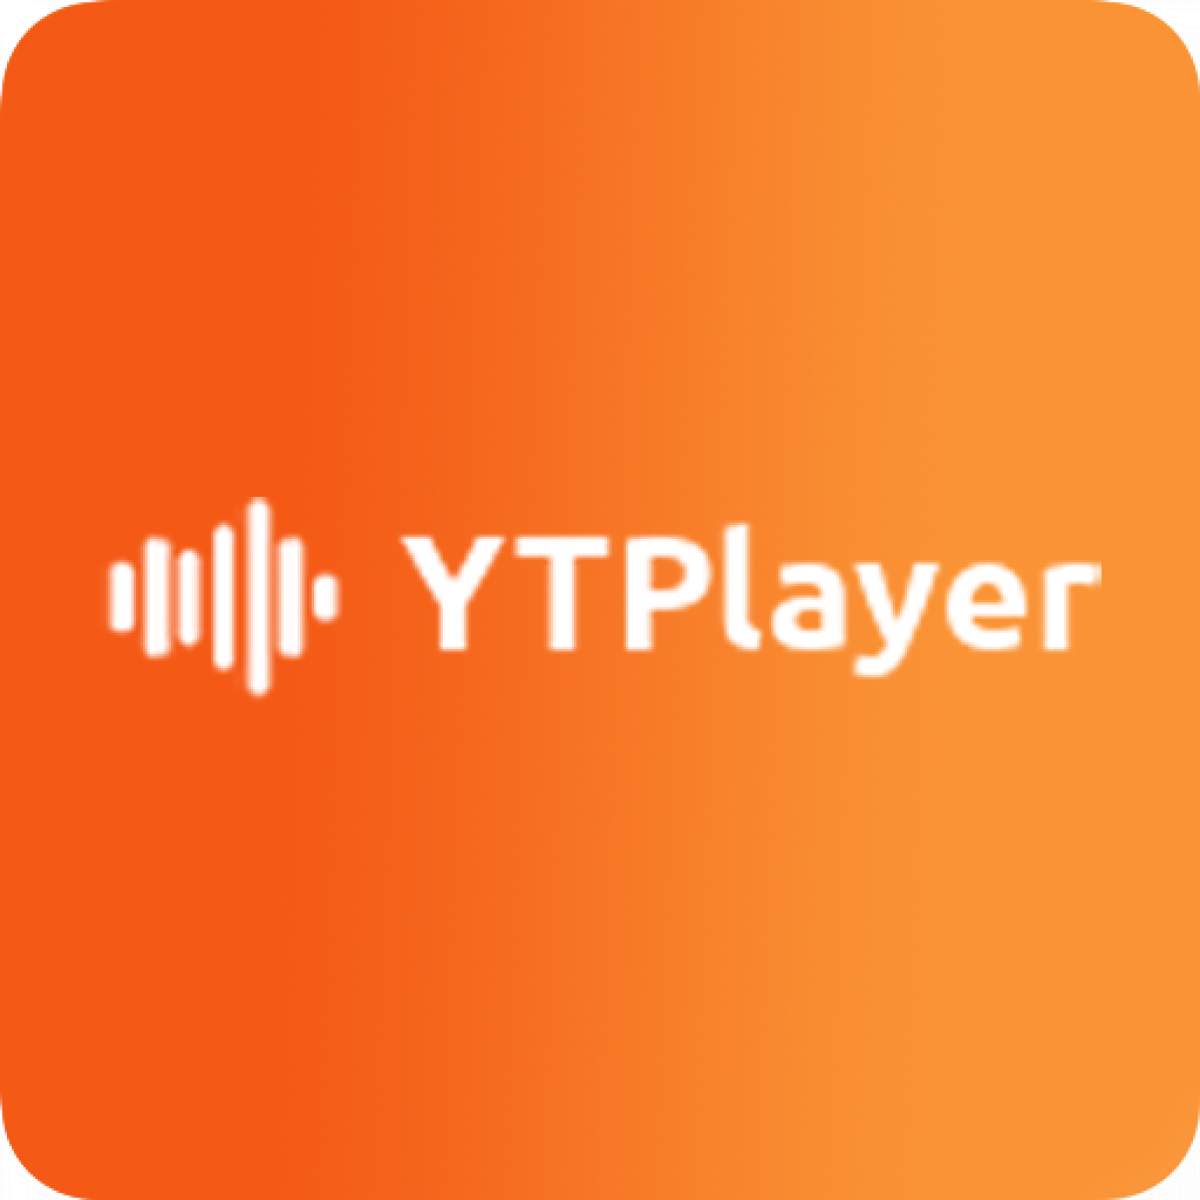 YTPlayer Premium APK Pro let you download YouTube videos